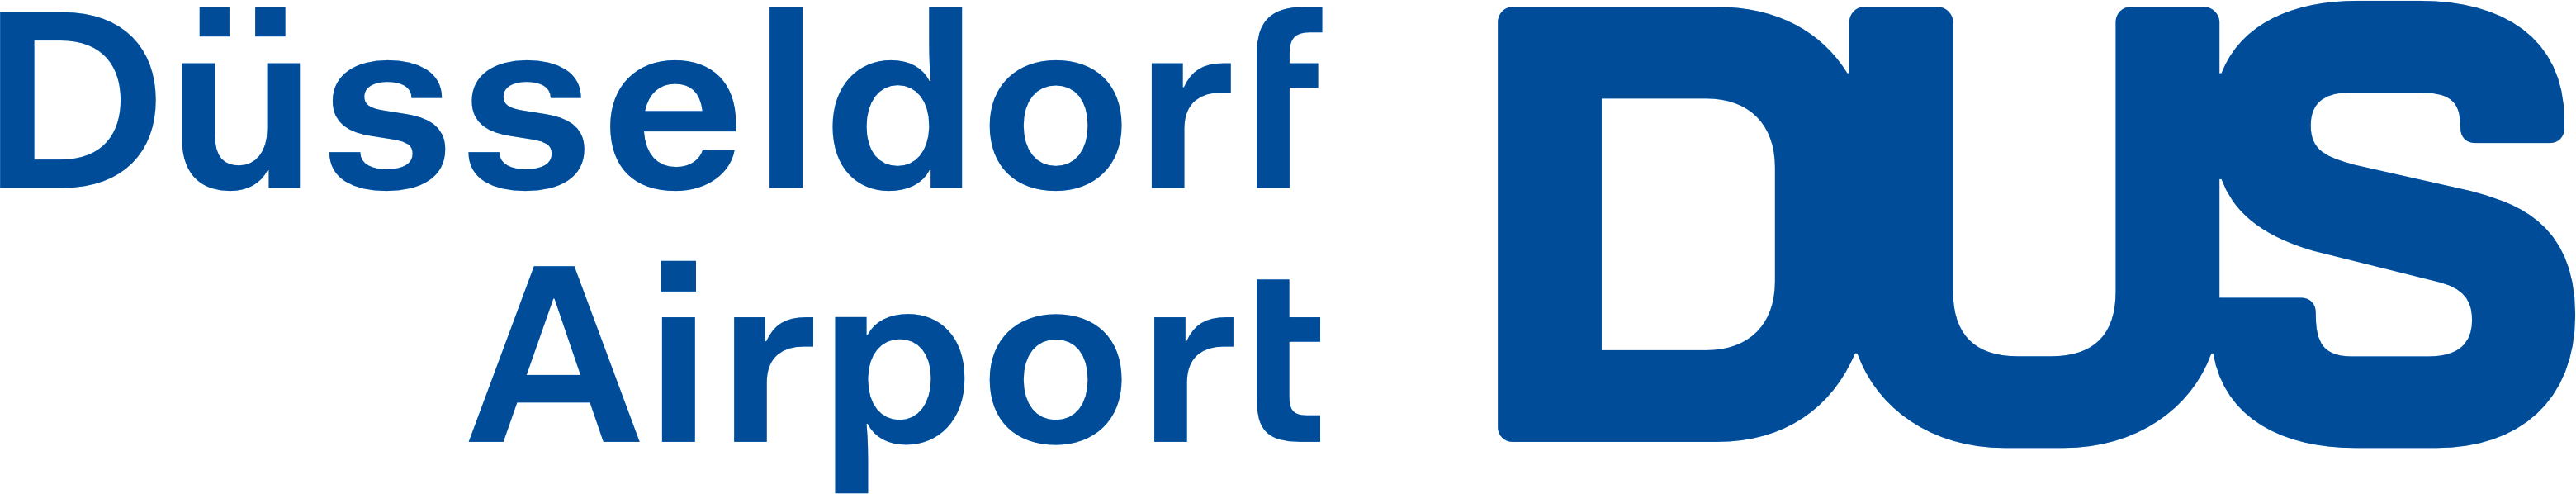 Düsseldorf Airport Logo